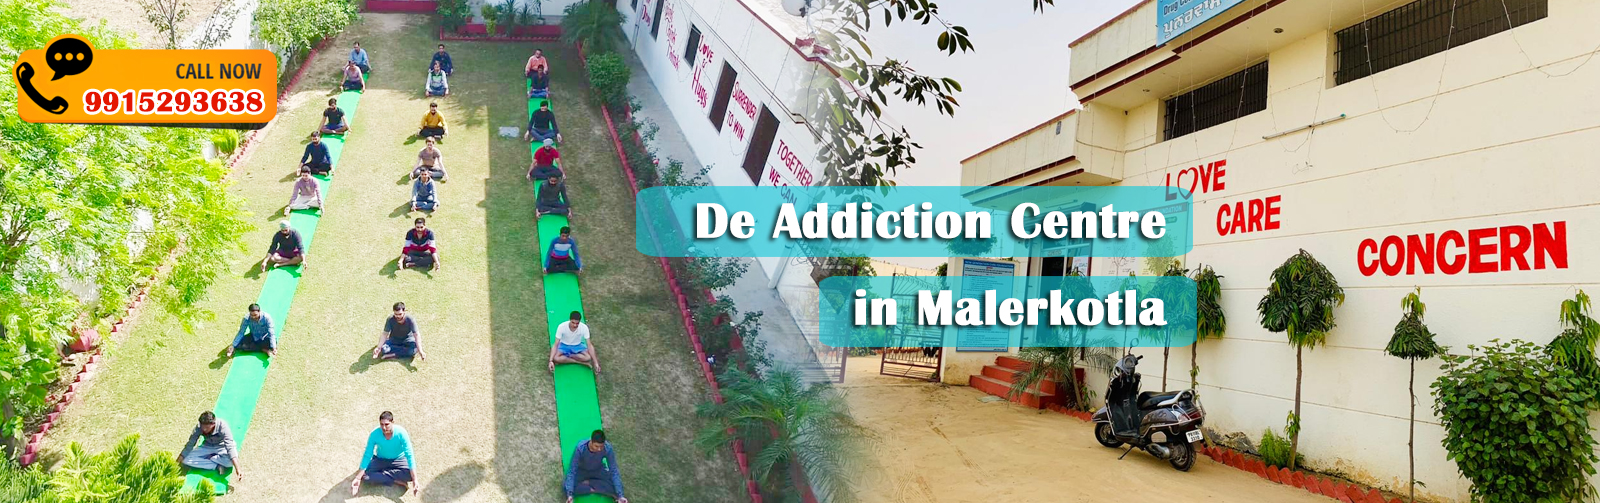 De Addiction Centre in Malerkotla